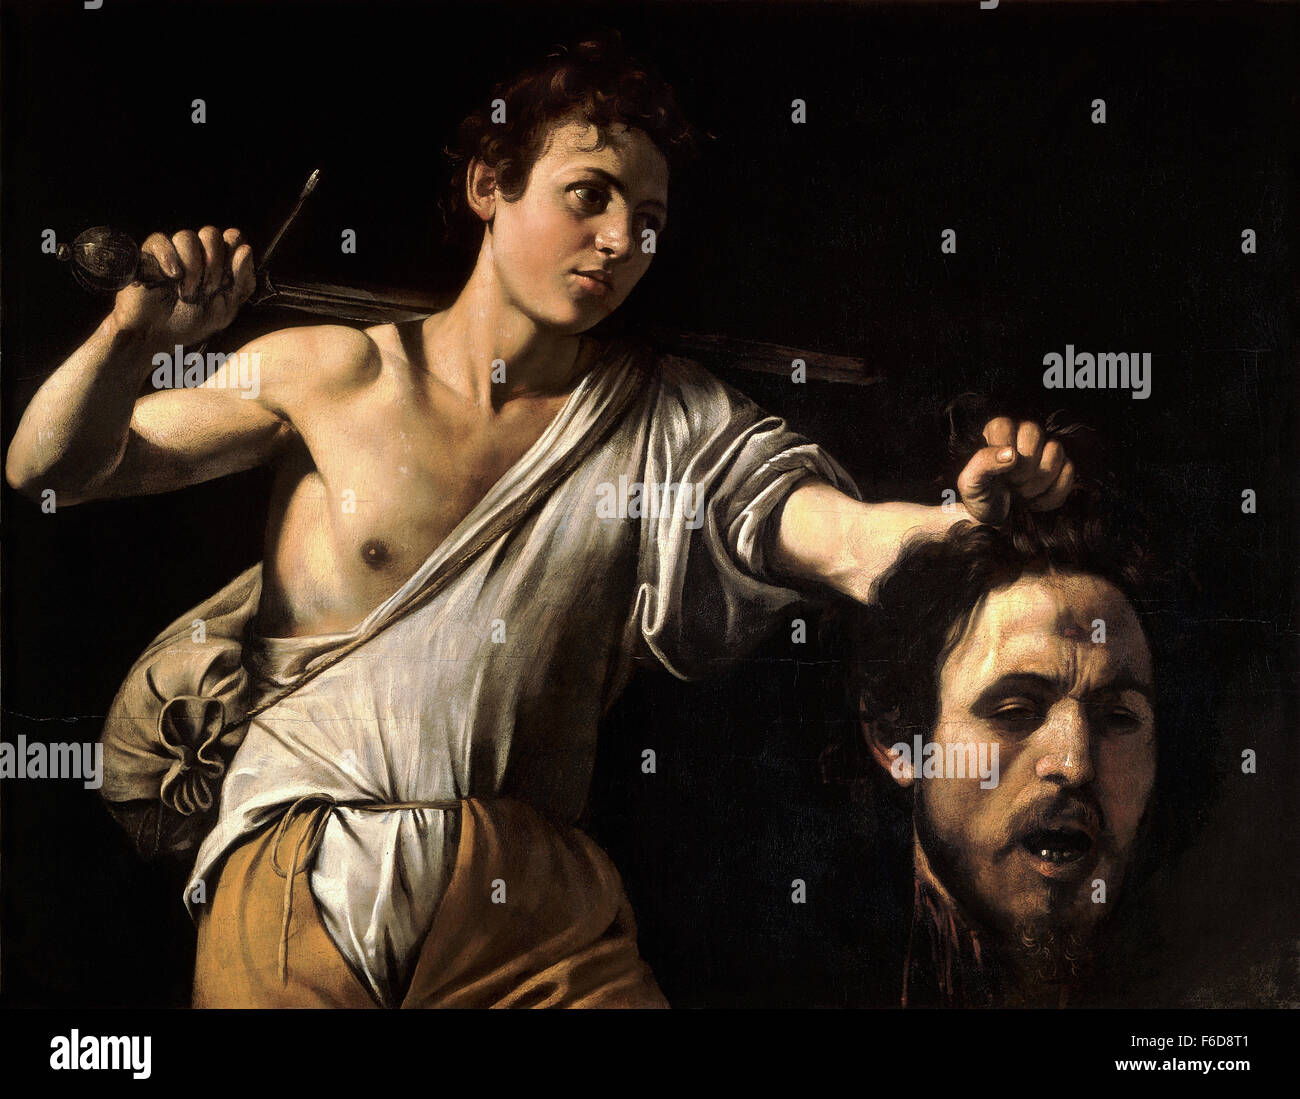 Michelangelo Merisi da Caravaggio - David avec la tête de Goliath Banque D'Images